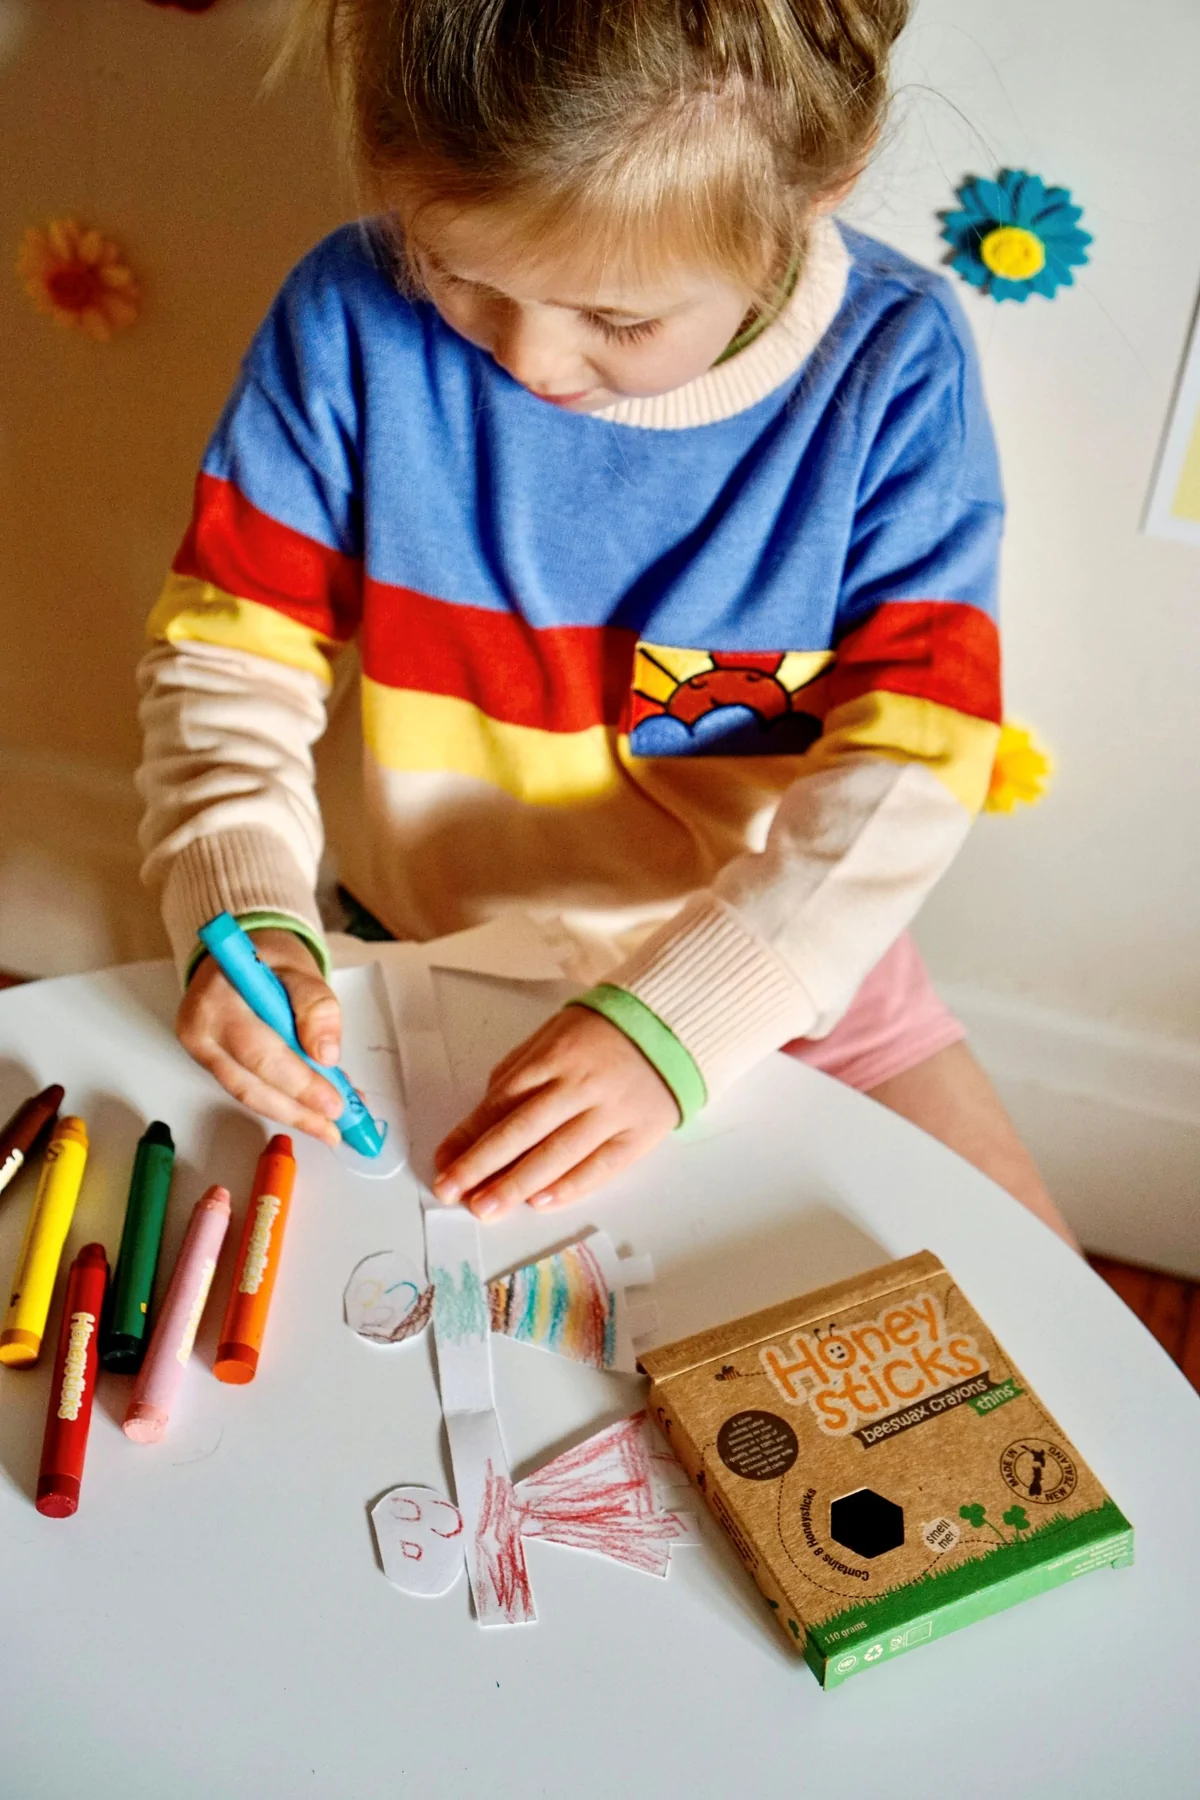 Honey Sticks Crayons – Sensory Tools Australia